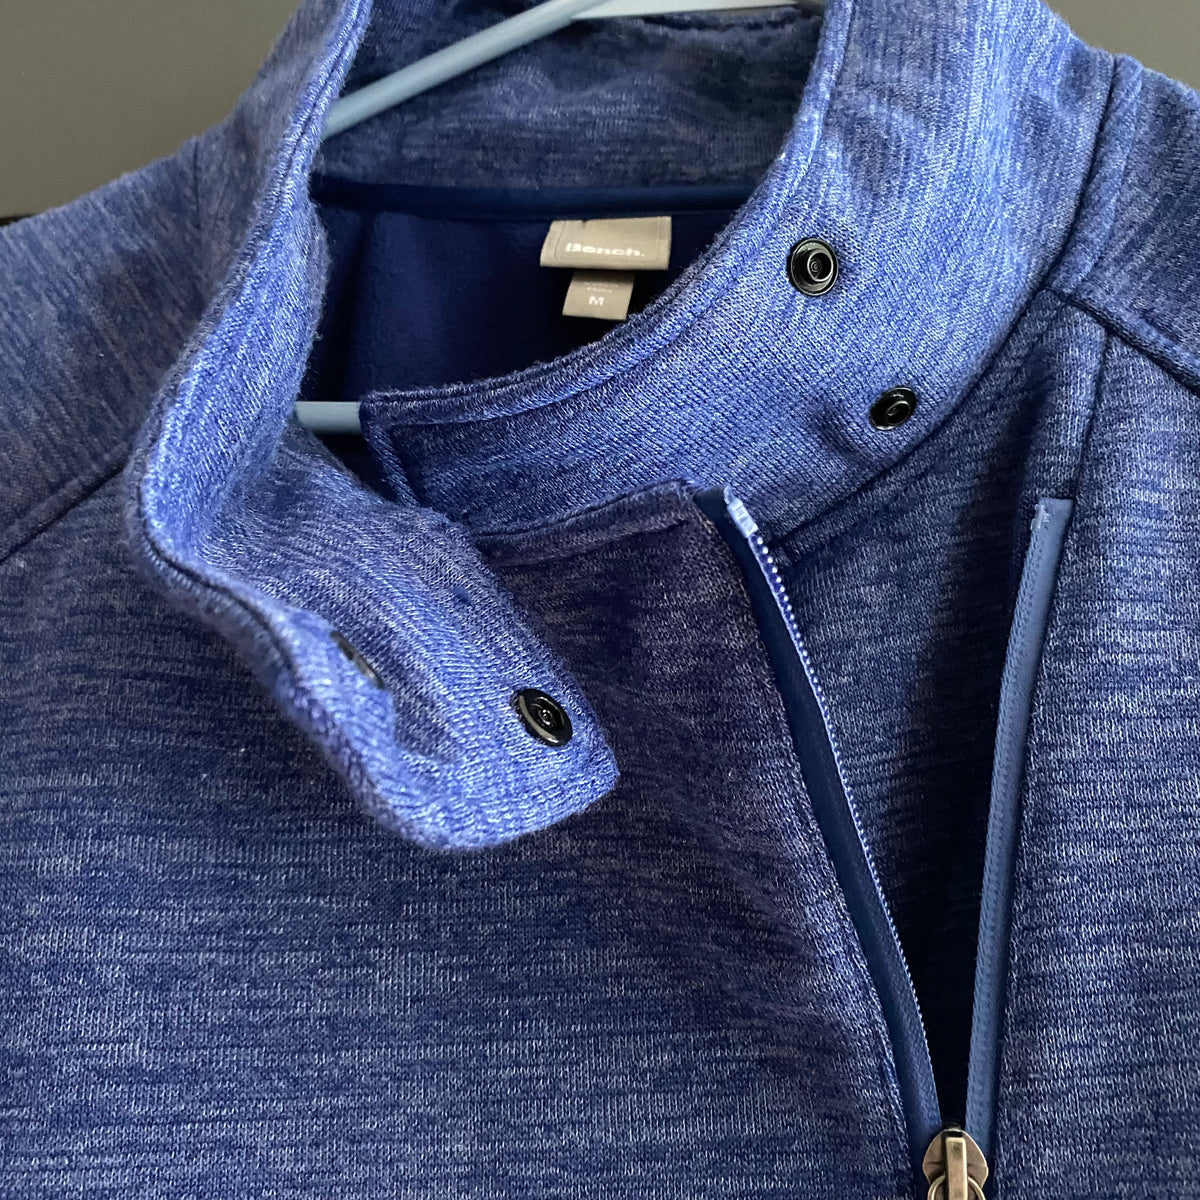 Full Zip Sweater/Jacket (Women&#39;s MEDIUM)